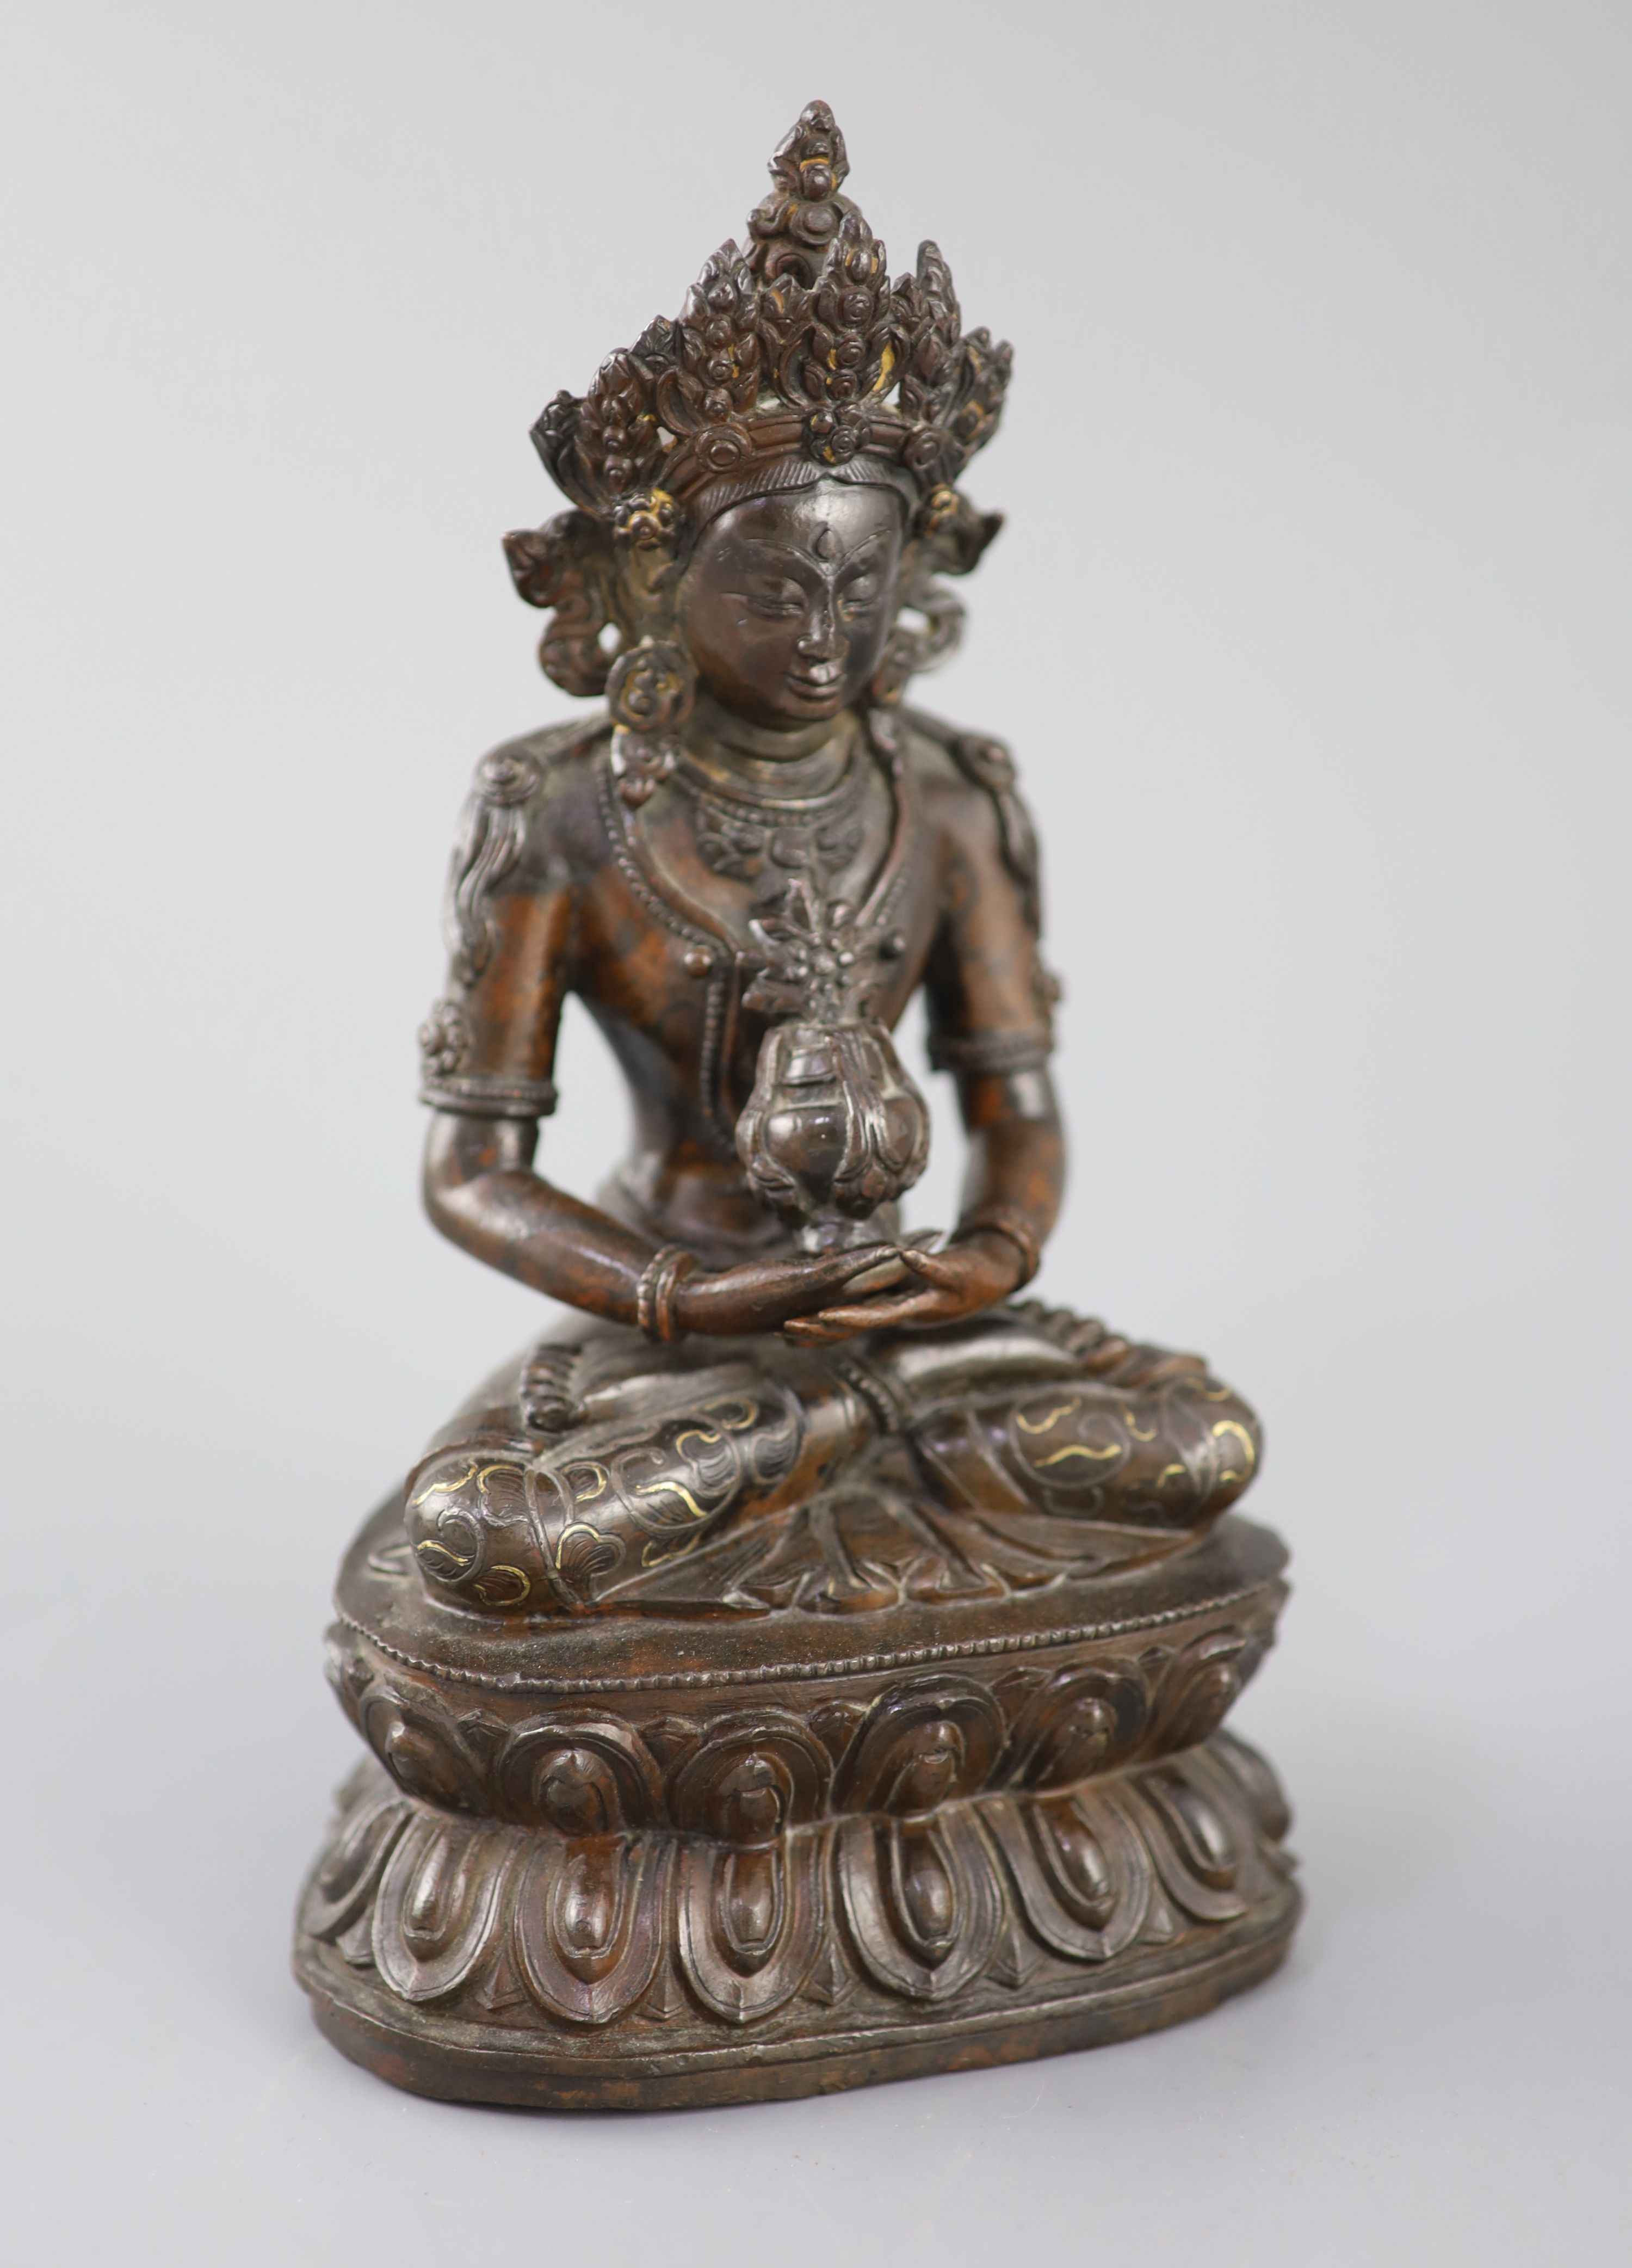 A Tibetan silver and gold inlaid copper alloy figure of Amitayus/Amitabha, c.15th century, 20.5cm high